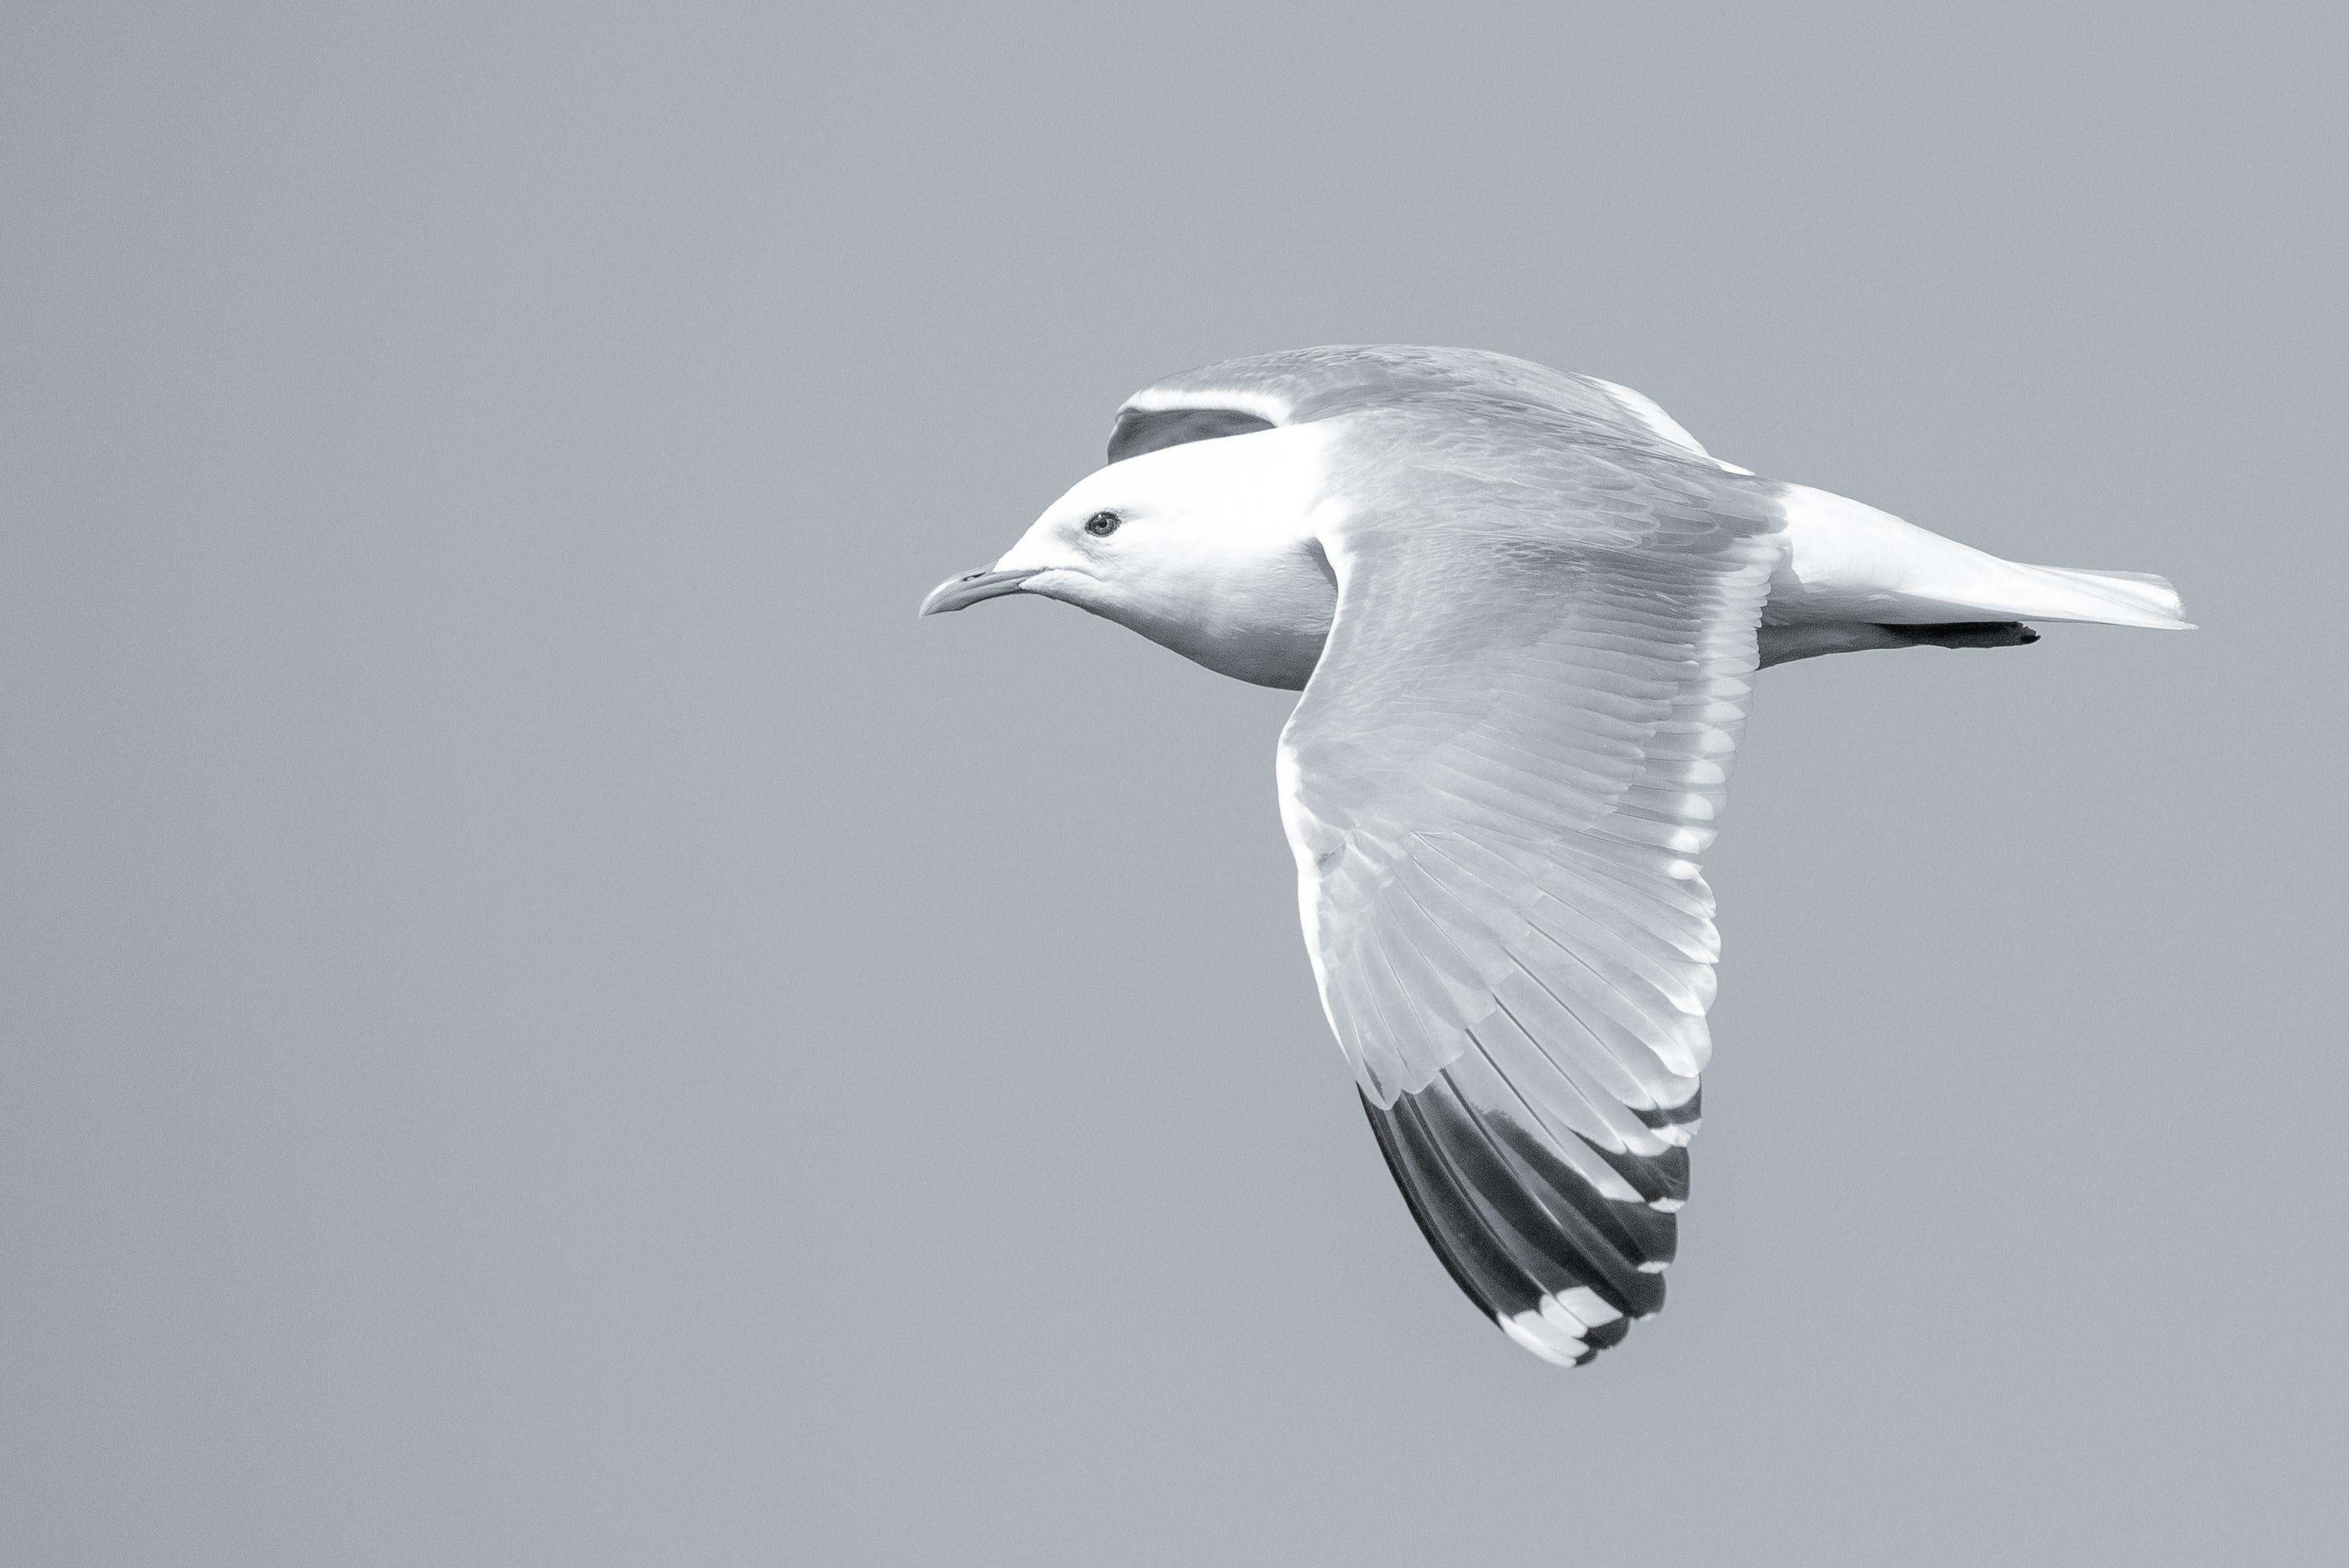 grayscale seagull photo